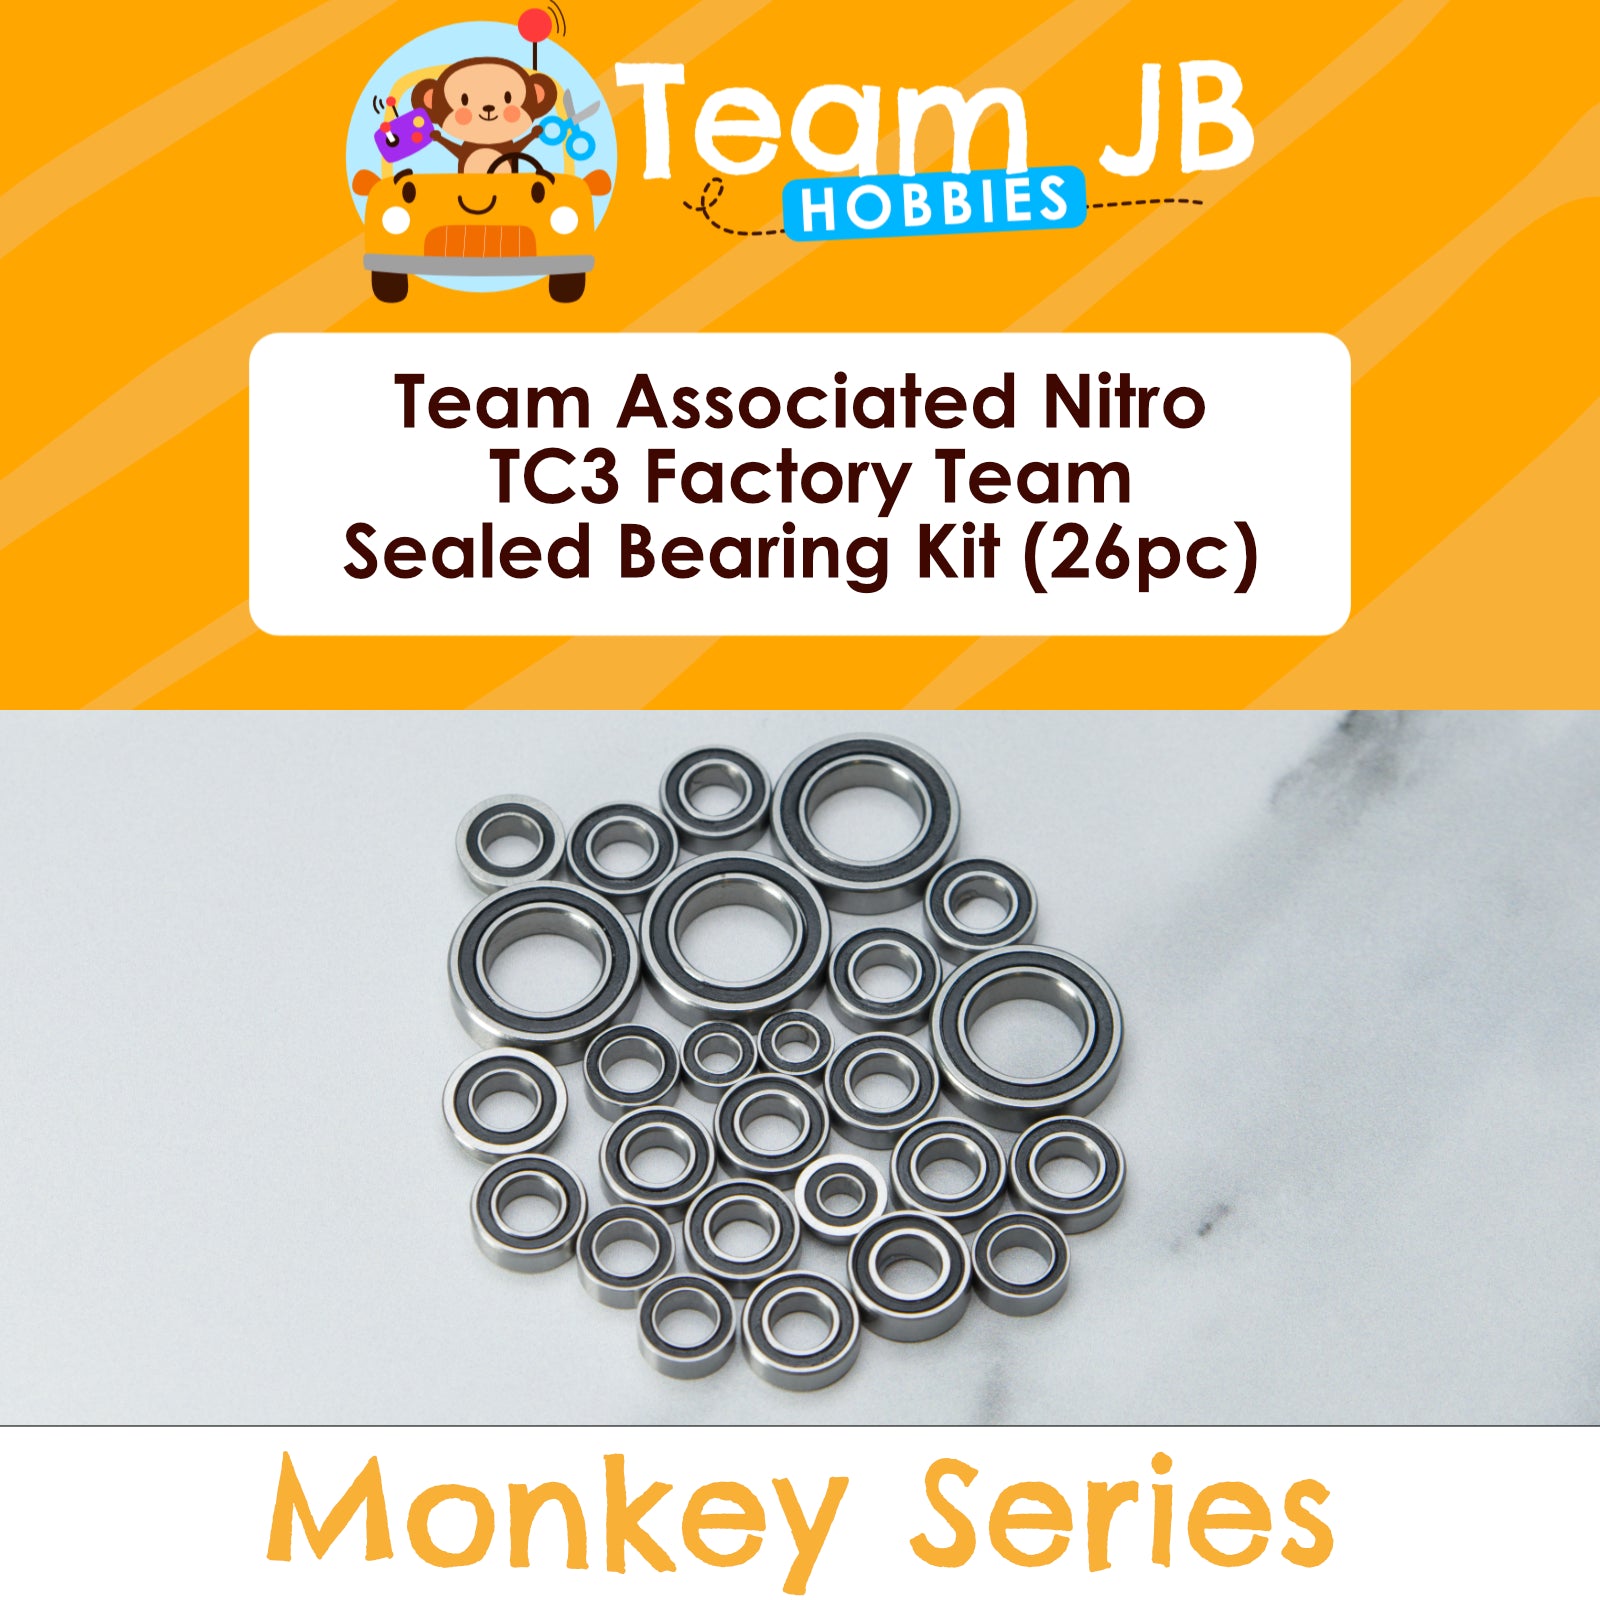 Team Associated Nitro TC3 Factory Team - Sealed Bearing Kit